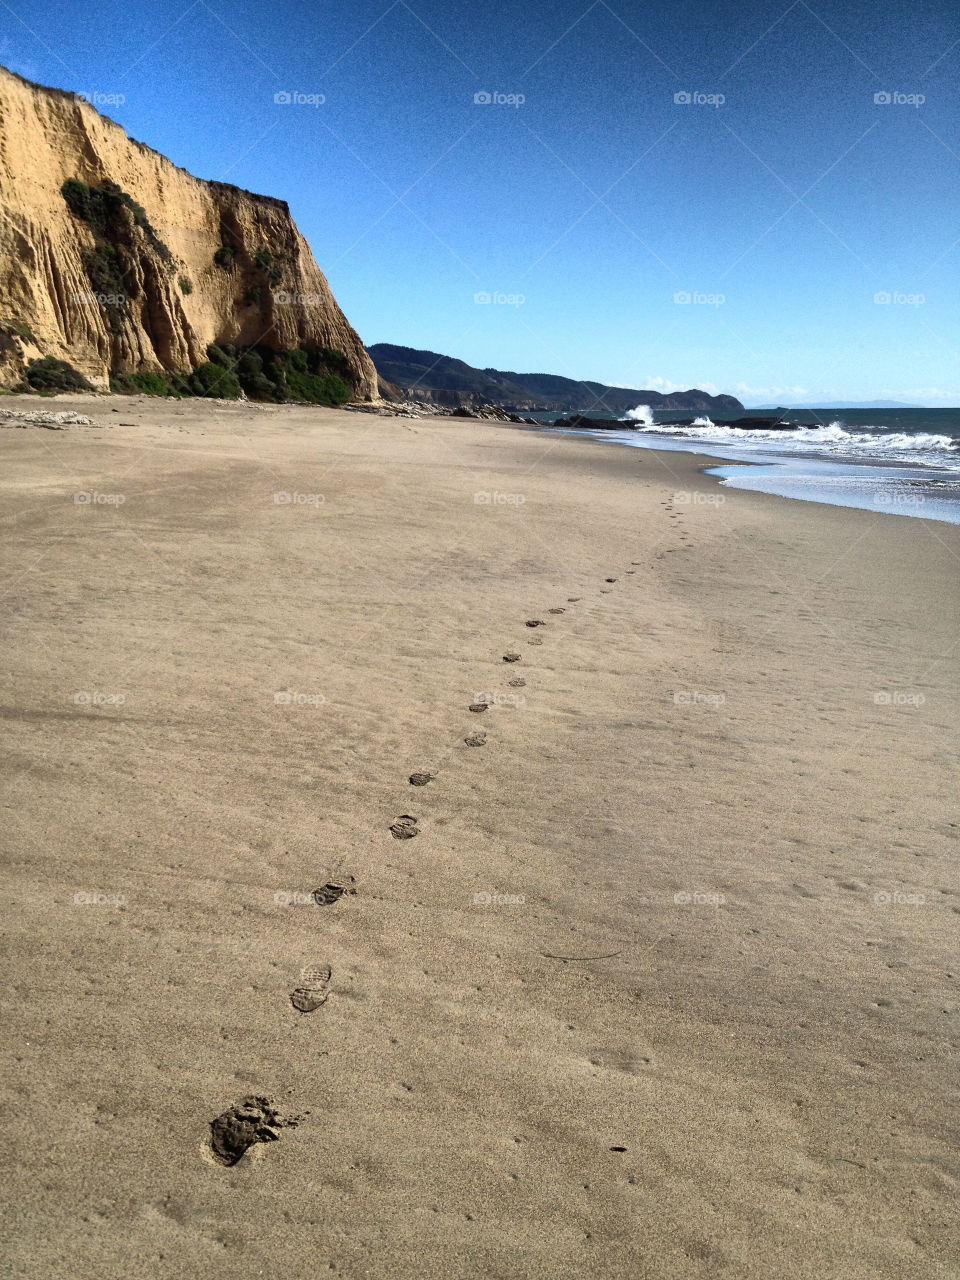 beach northern california foot prints pt reyes by pixel